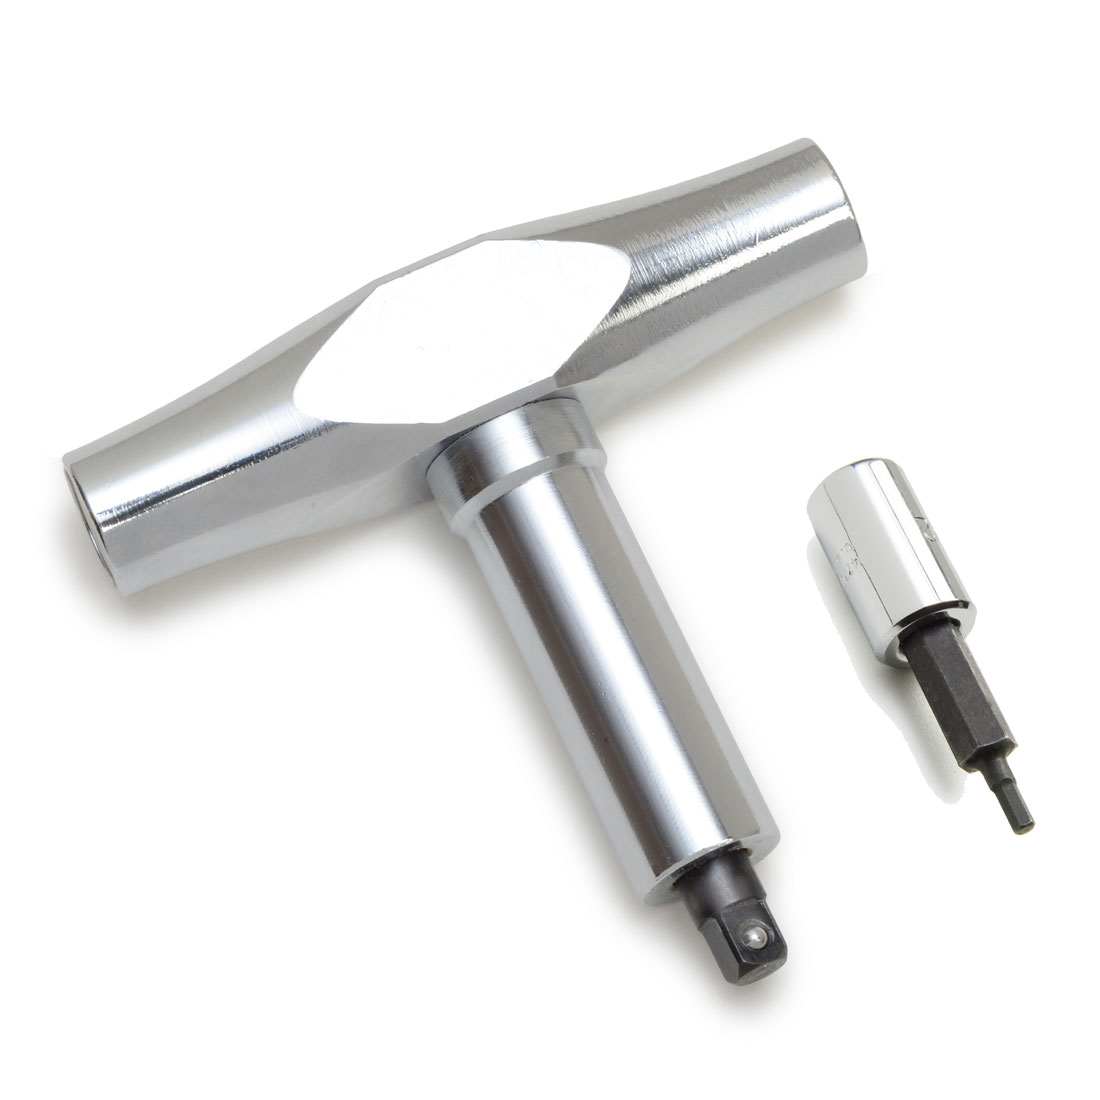 Yadianna 1pc Universal Head 1/4 Adjustable Torque Wrench Hexagonal Key Wrench Set Key Ratchet Socket Hook Spanner Extension Bar